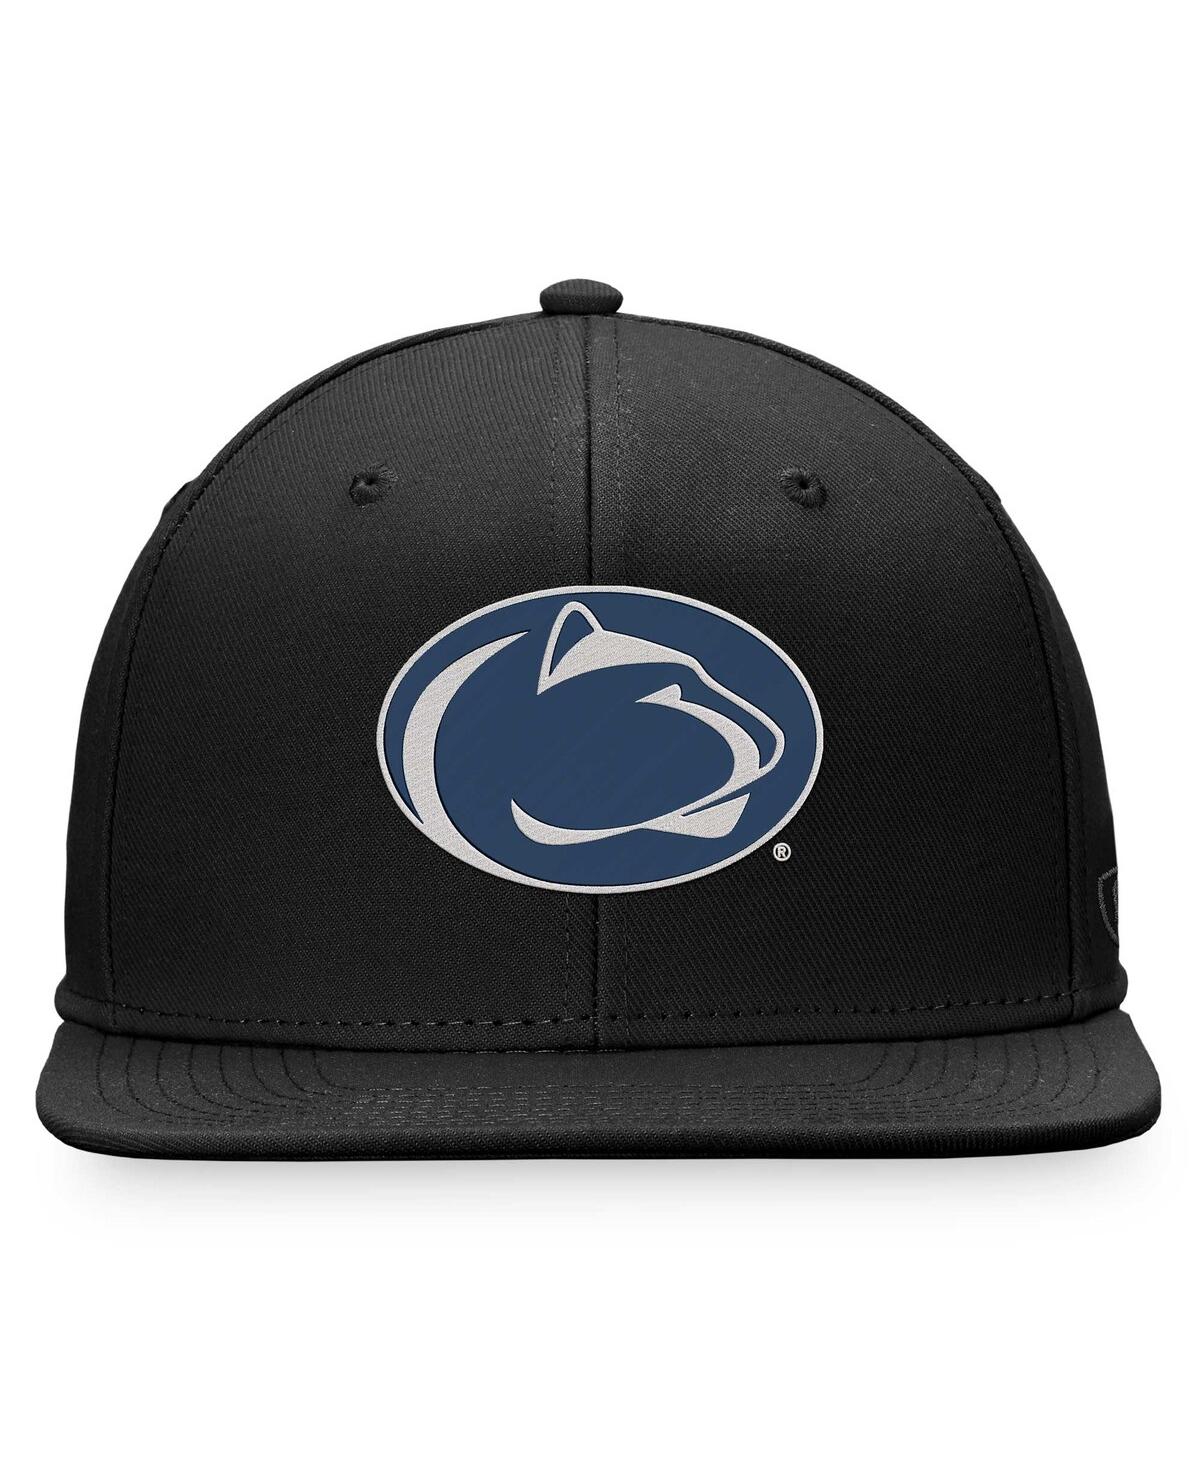 Shop Top Of The World Men's  Black Penn State Nittany Lions Dusk Flex Hat